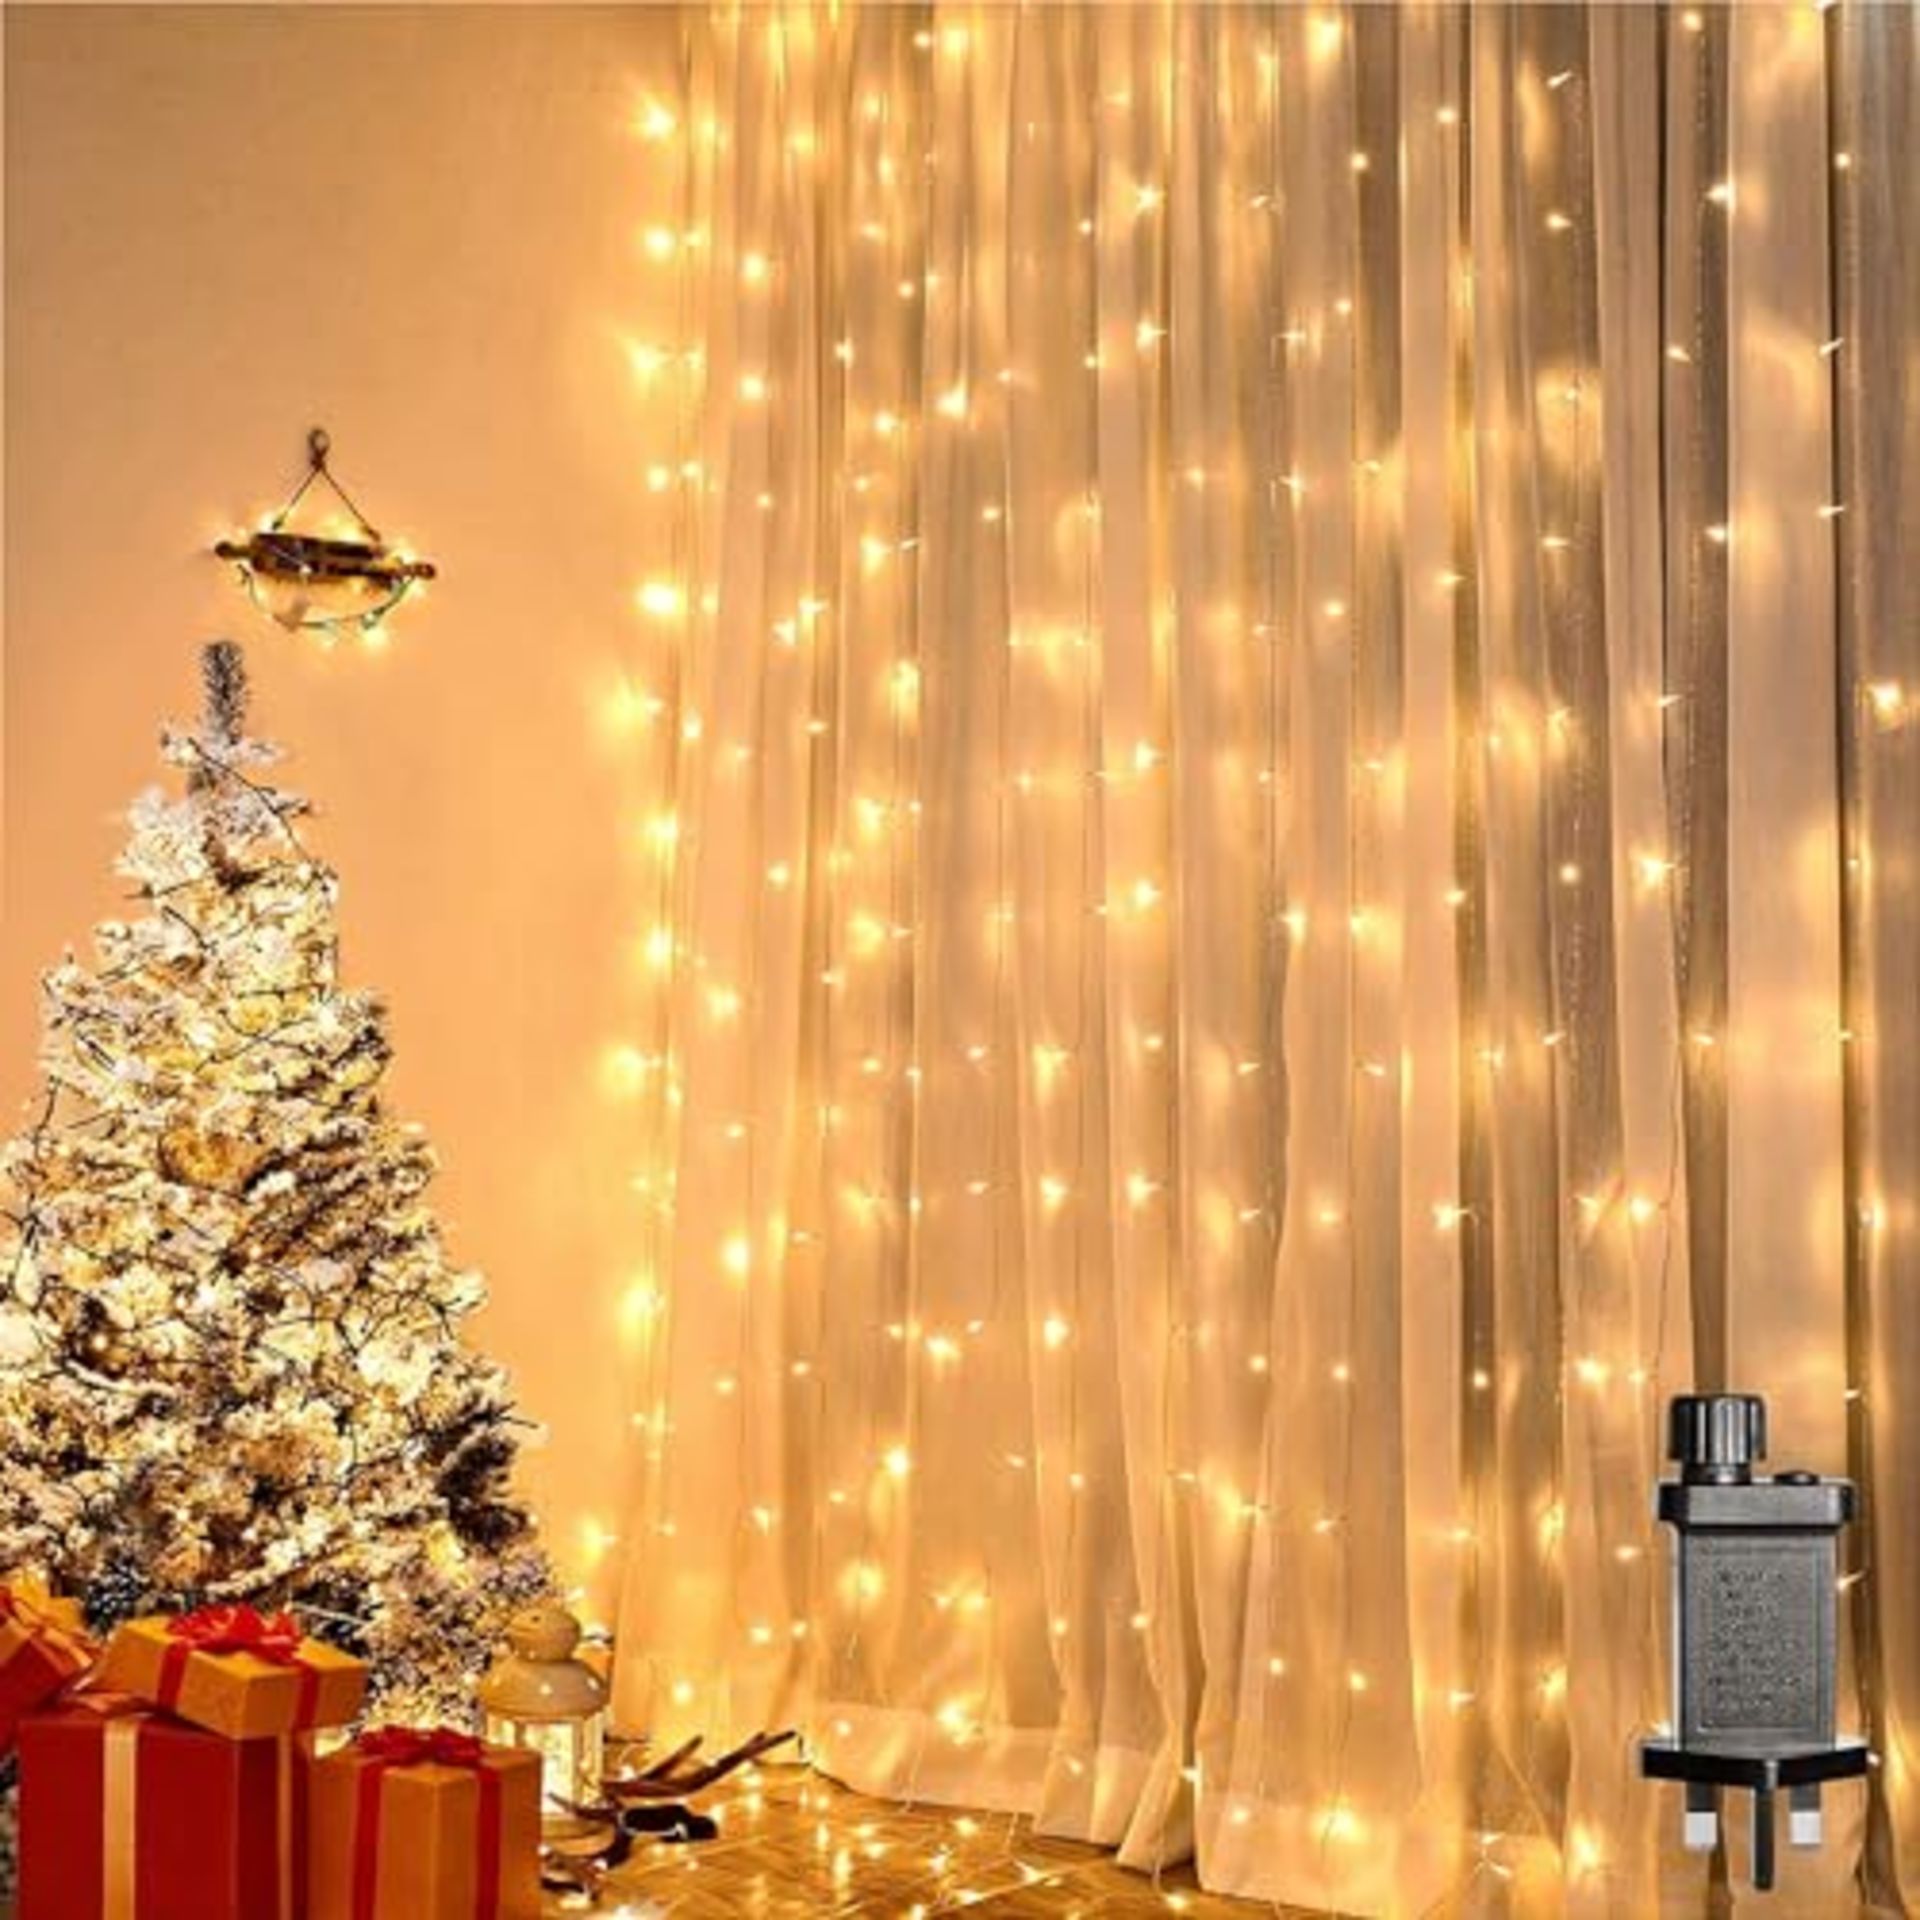 LIGHTNUM 306 LED Curtain Lights, 3m X 3m Christmas Window Lights Outdoor Indoor, Warm